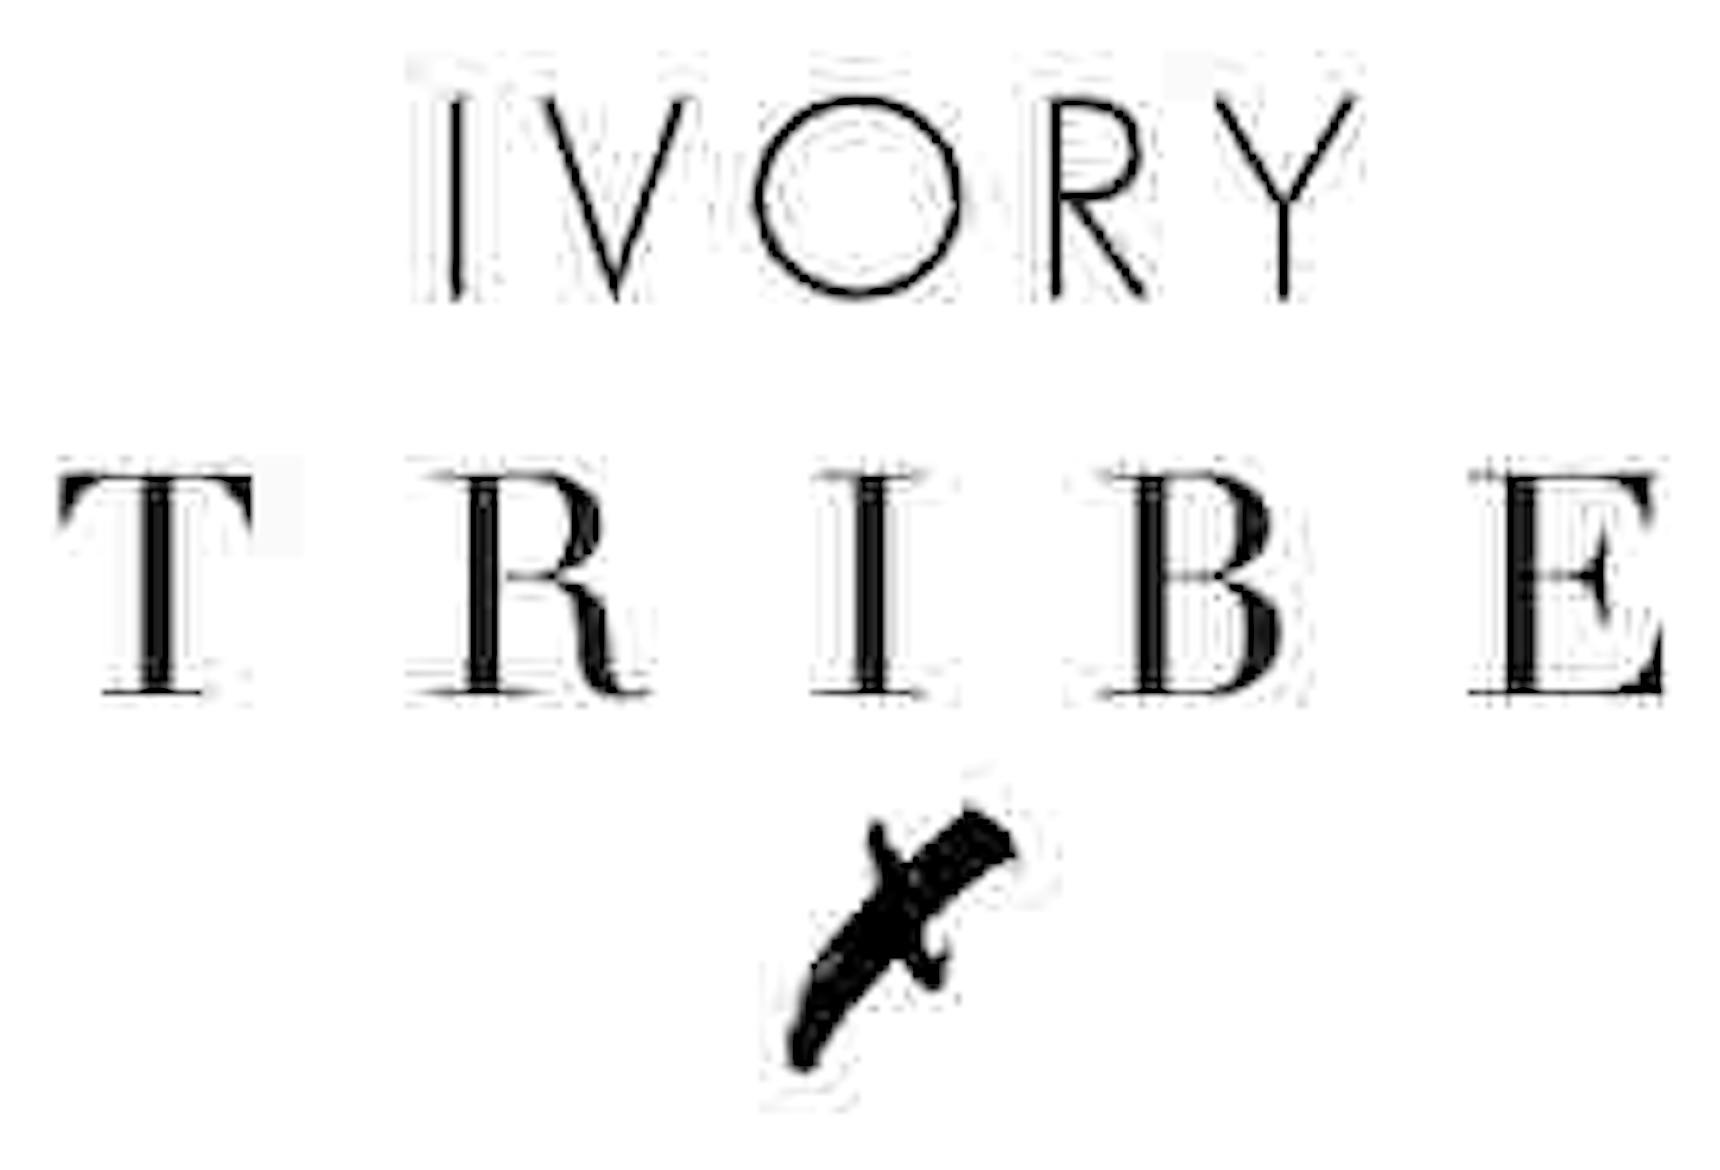 Ivory tribe